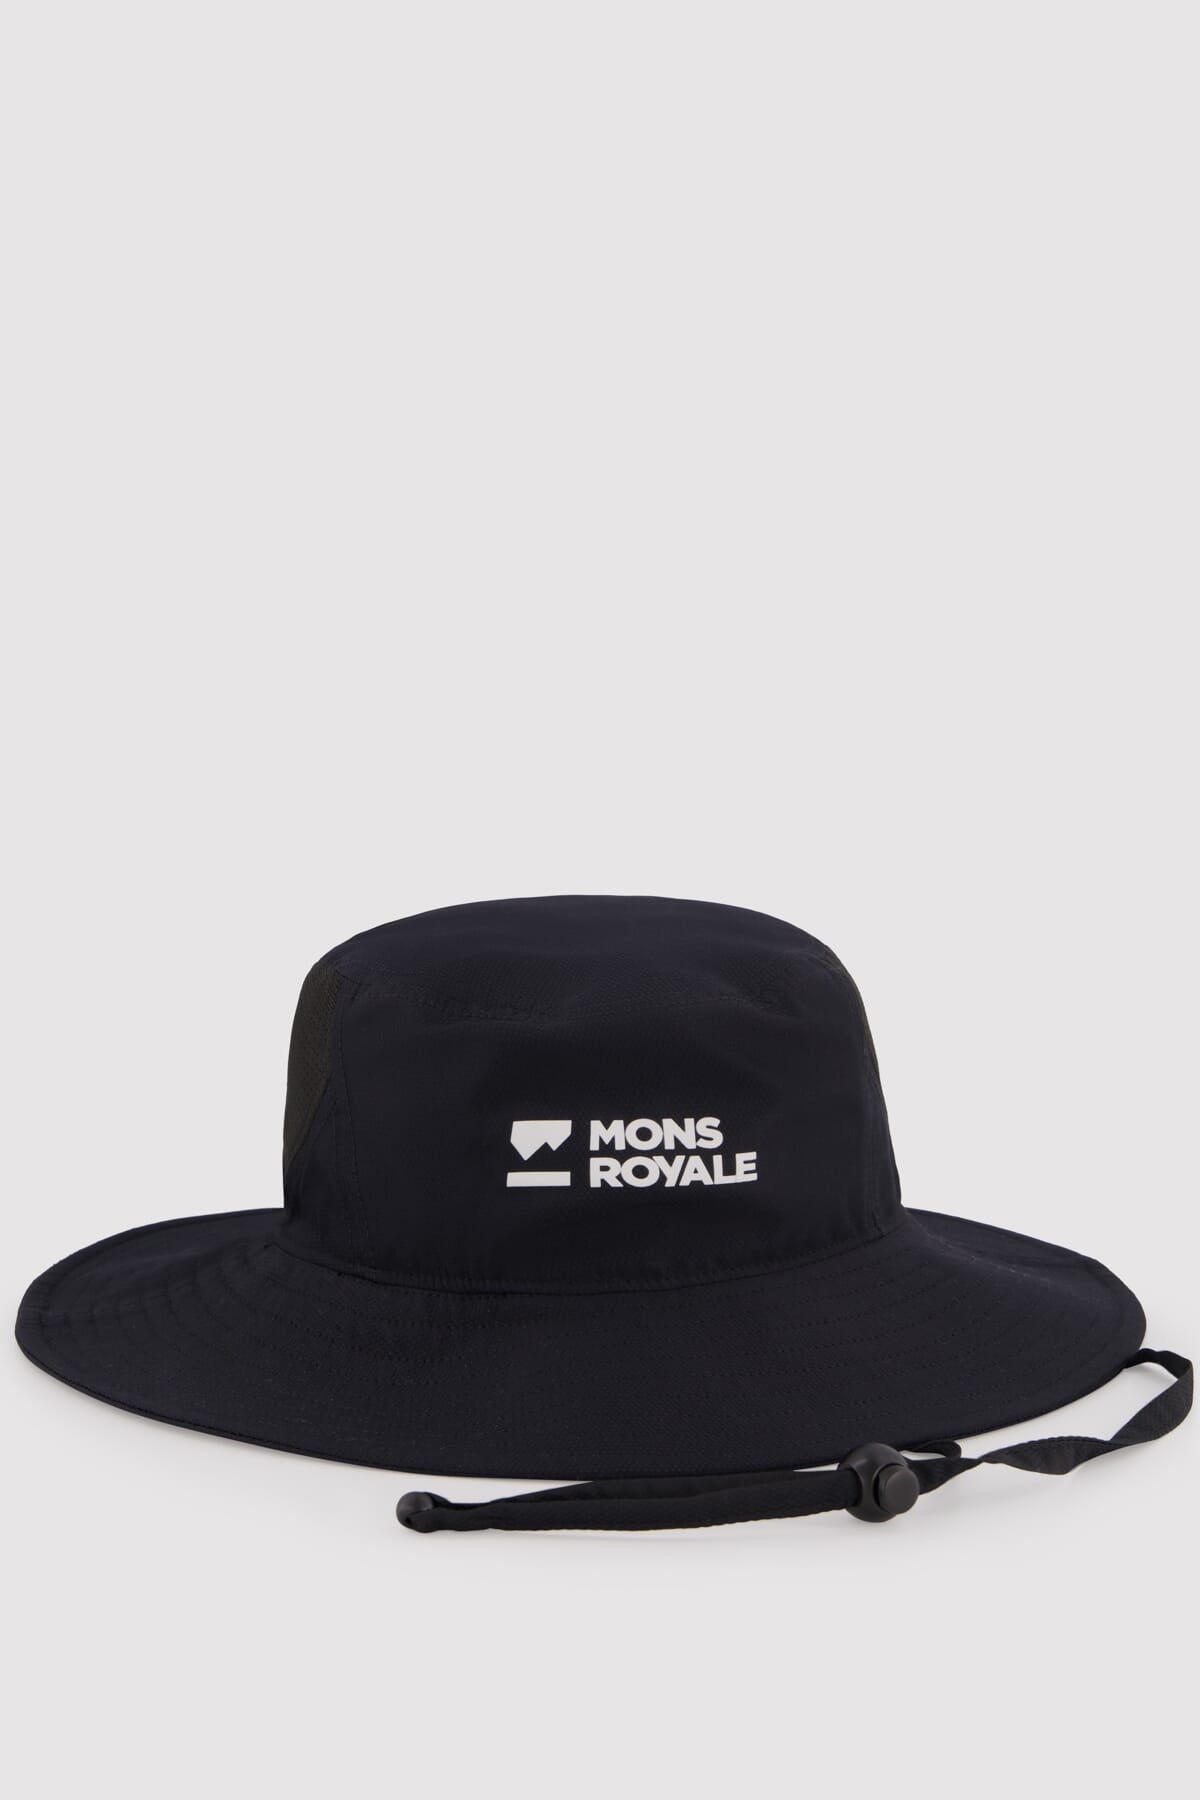 Mons Royale Velocity Bucket Hat - Black